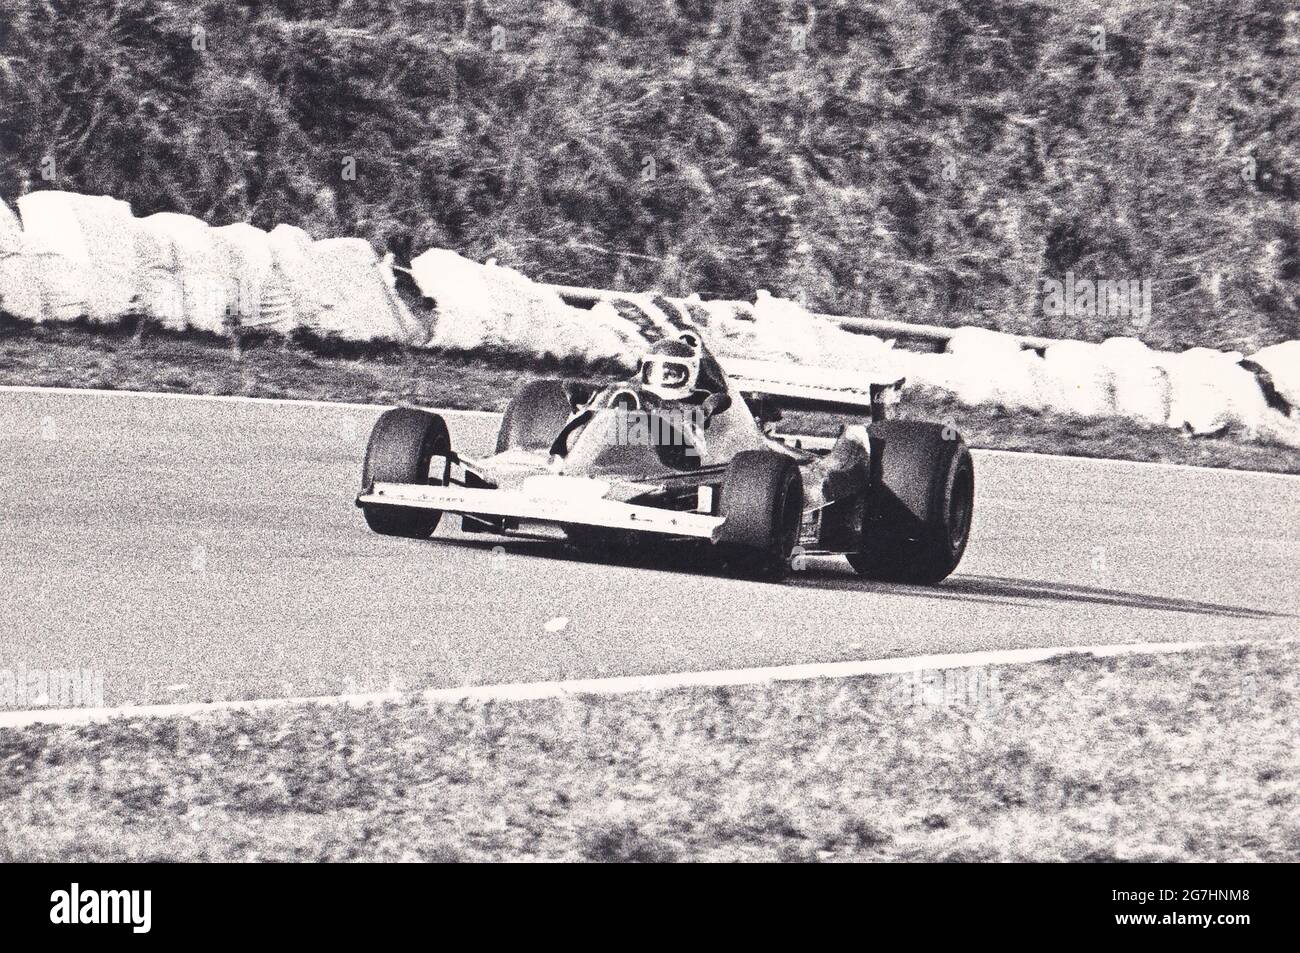 Carlos Reutemann during testing on a Ferrari 312T Formula 1 at the Mugello Circuit, Italy. Year 1977 Stock Photo